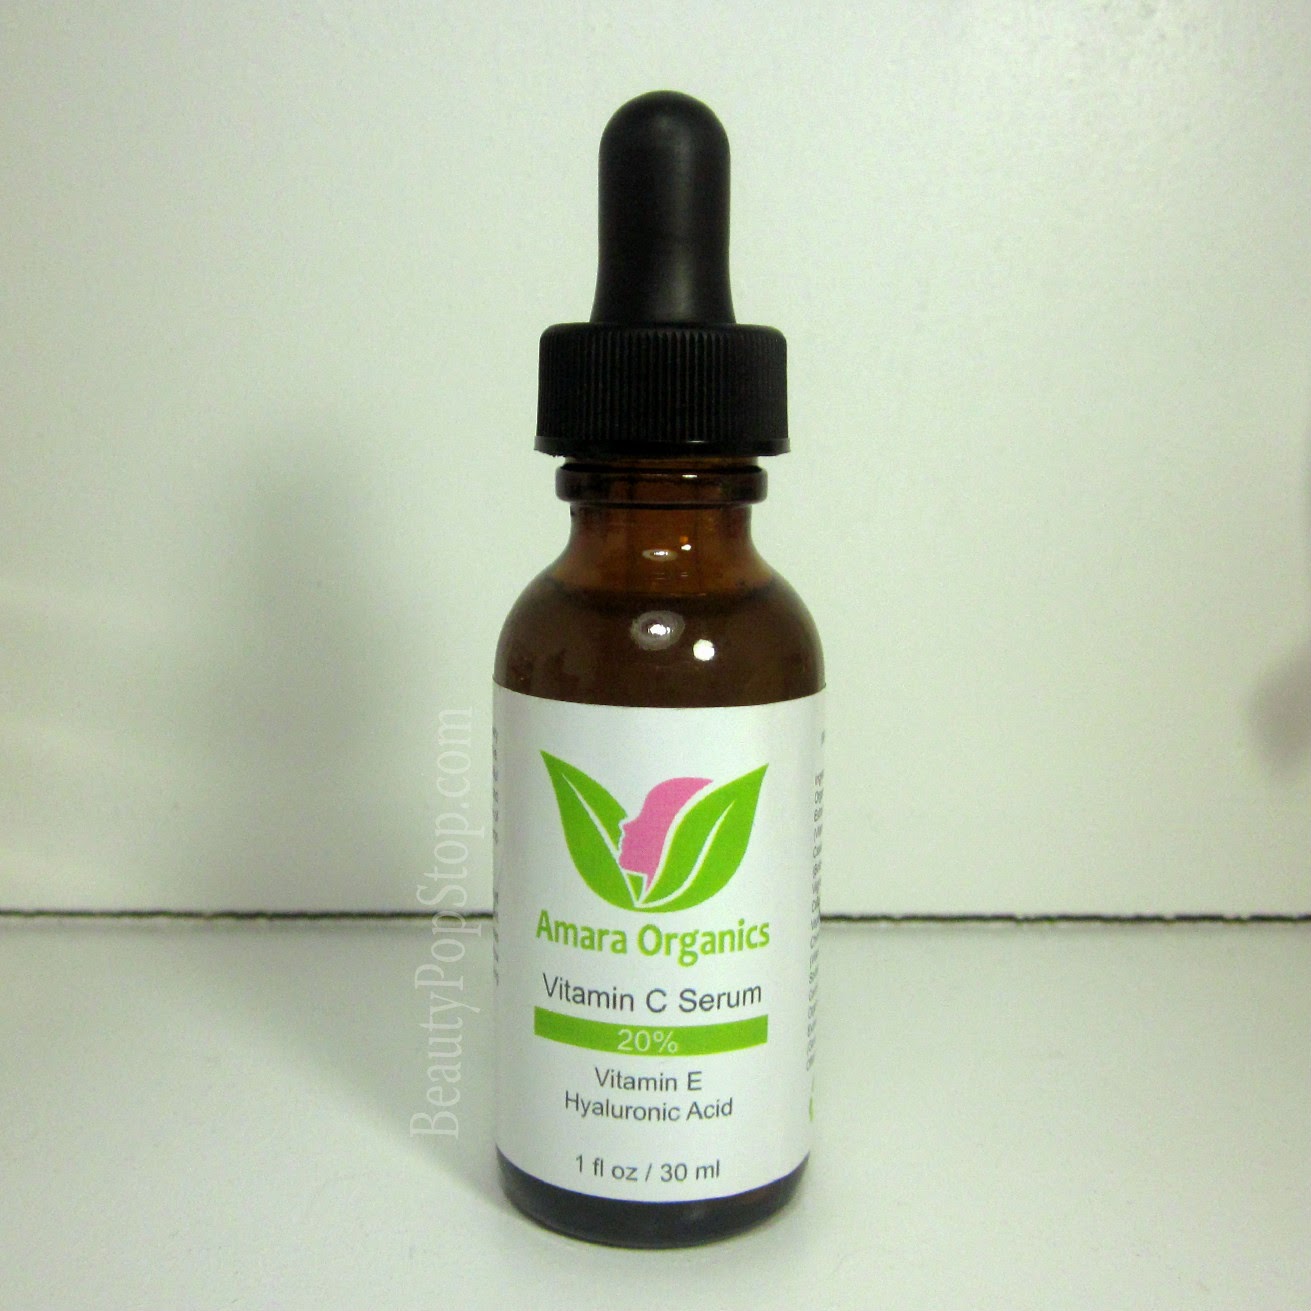 amara organics vitamin c serum face review